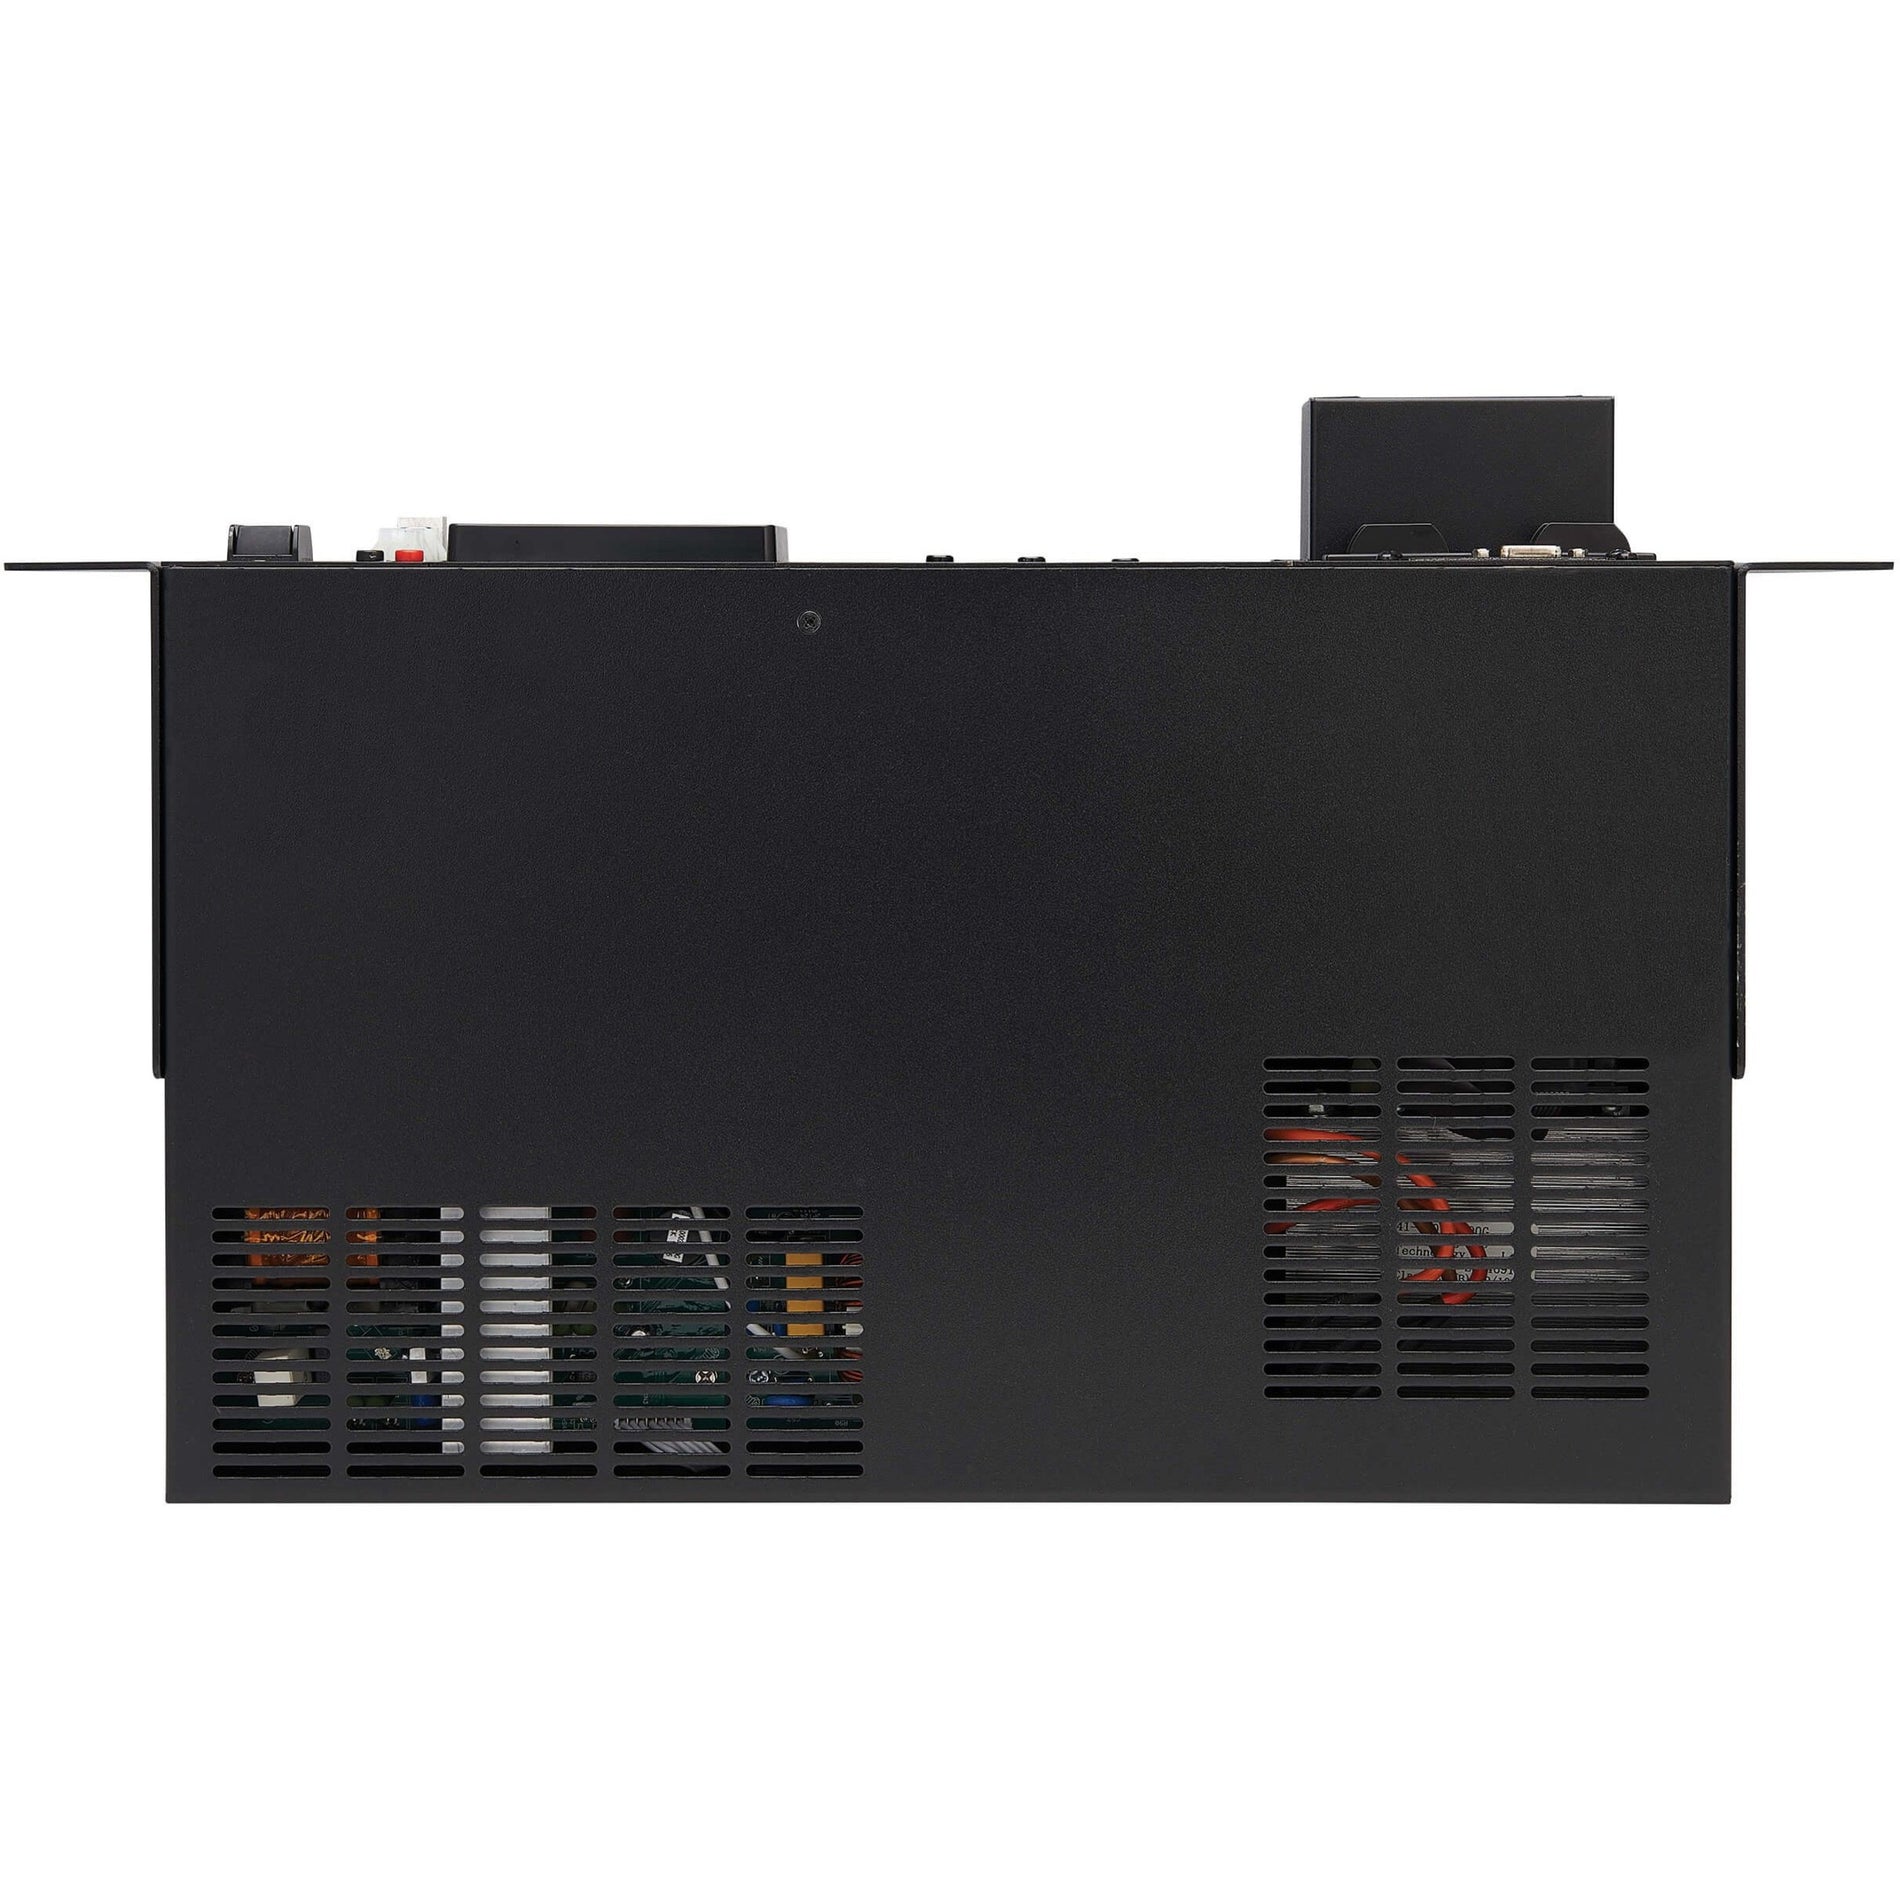 Tripp Lite SMART1524ET SmartPro 1500VA Rack-mountable UPS, 120VAC 24VDC 1200W, SNMP/Telnet/SSH, Pure Sine Wave